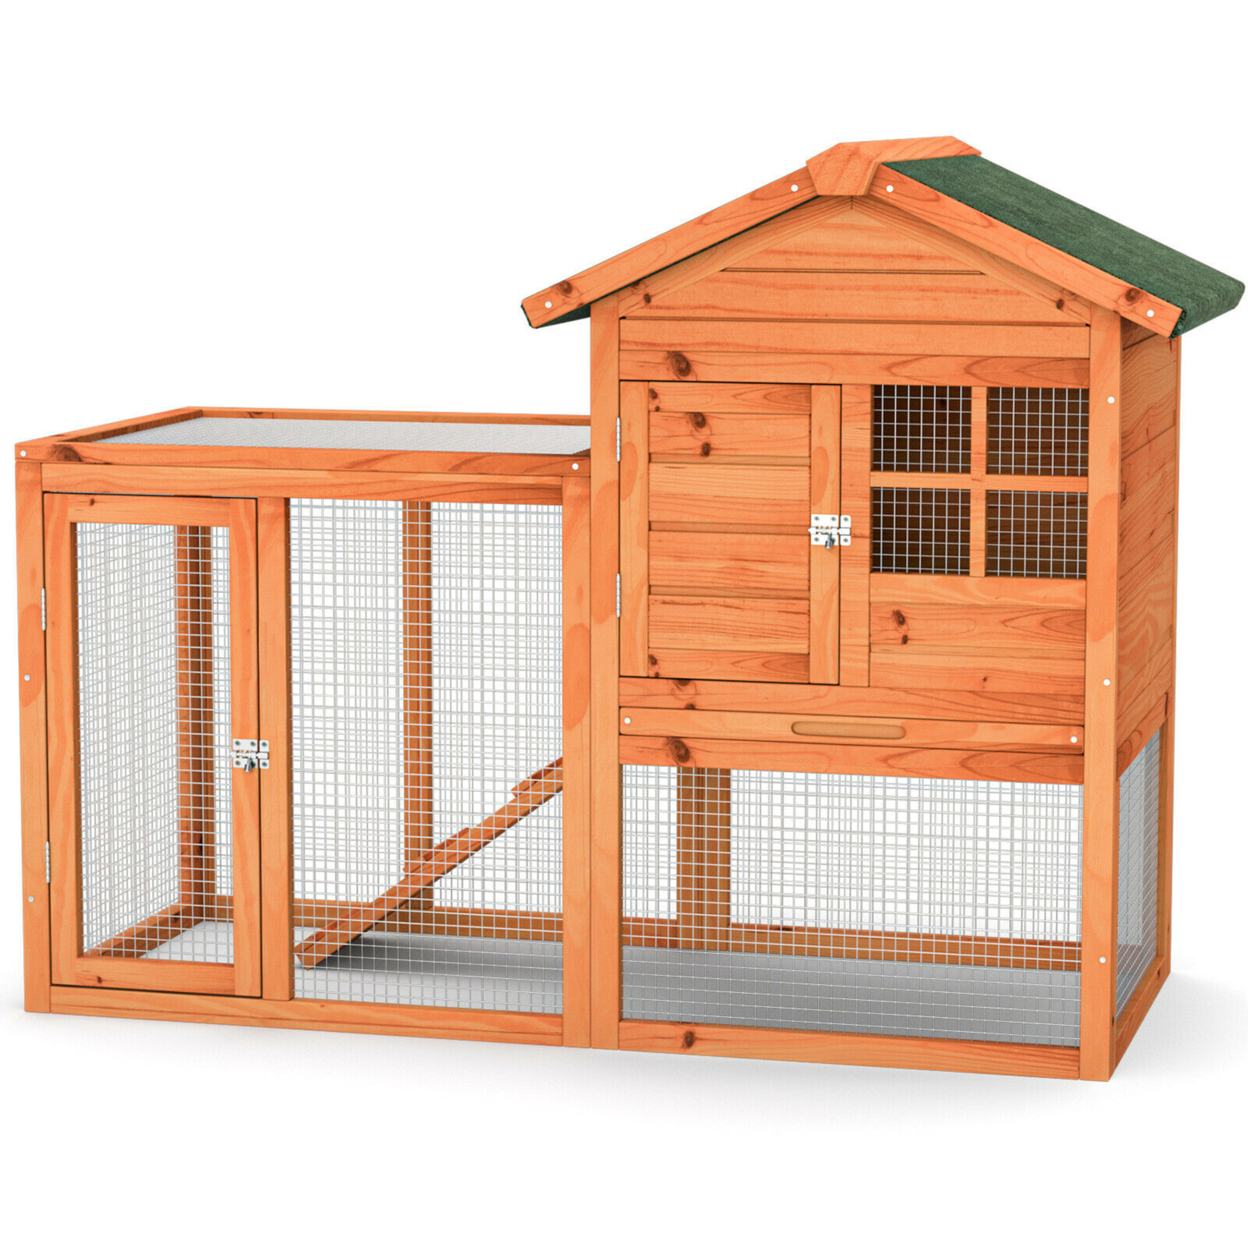 Gymax Wooden Chicken Coop Outdoor & Indoor Small Rabbit Hutch w/ Run Natural